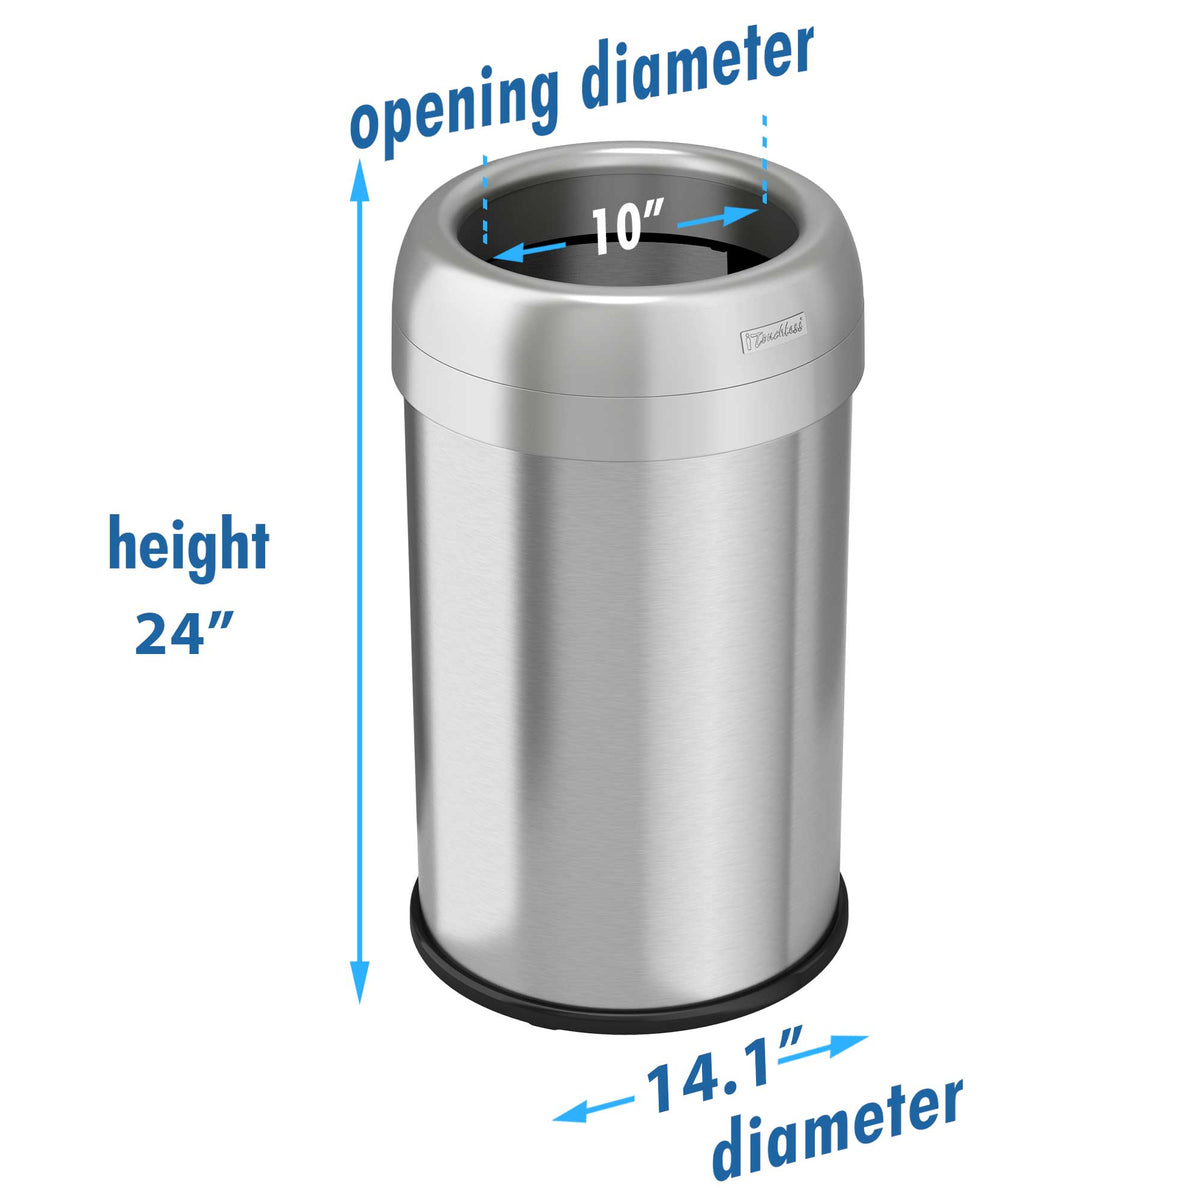 13 Gallon Round Open Top Trash Can dimensions